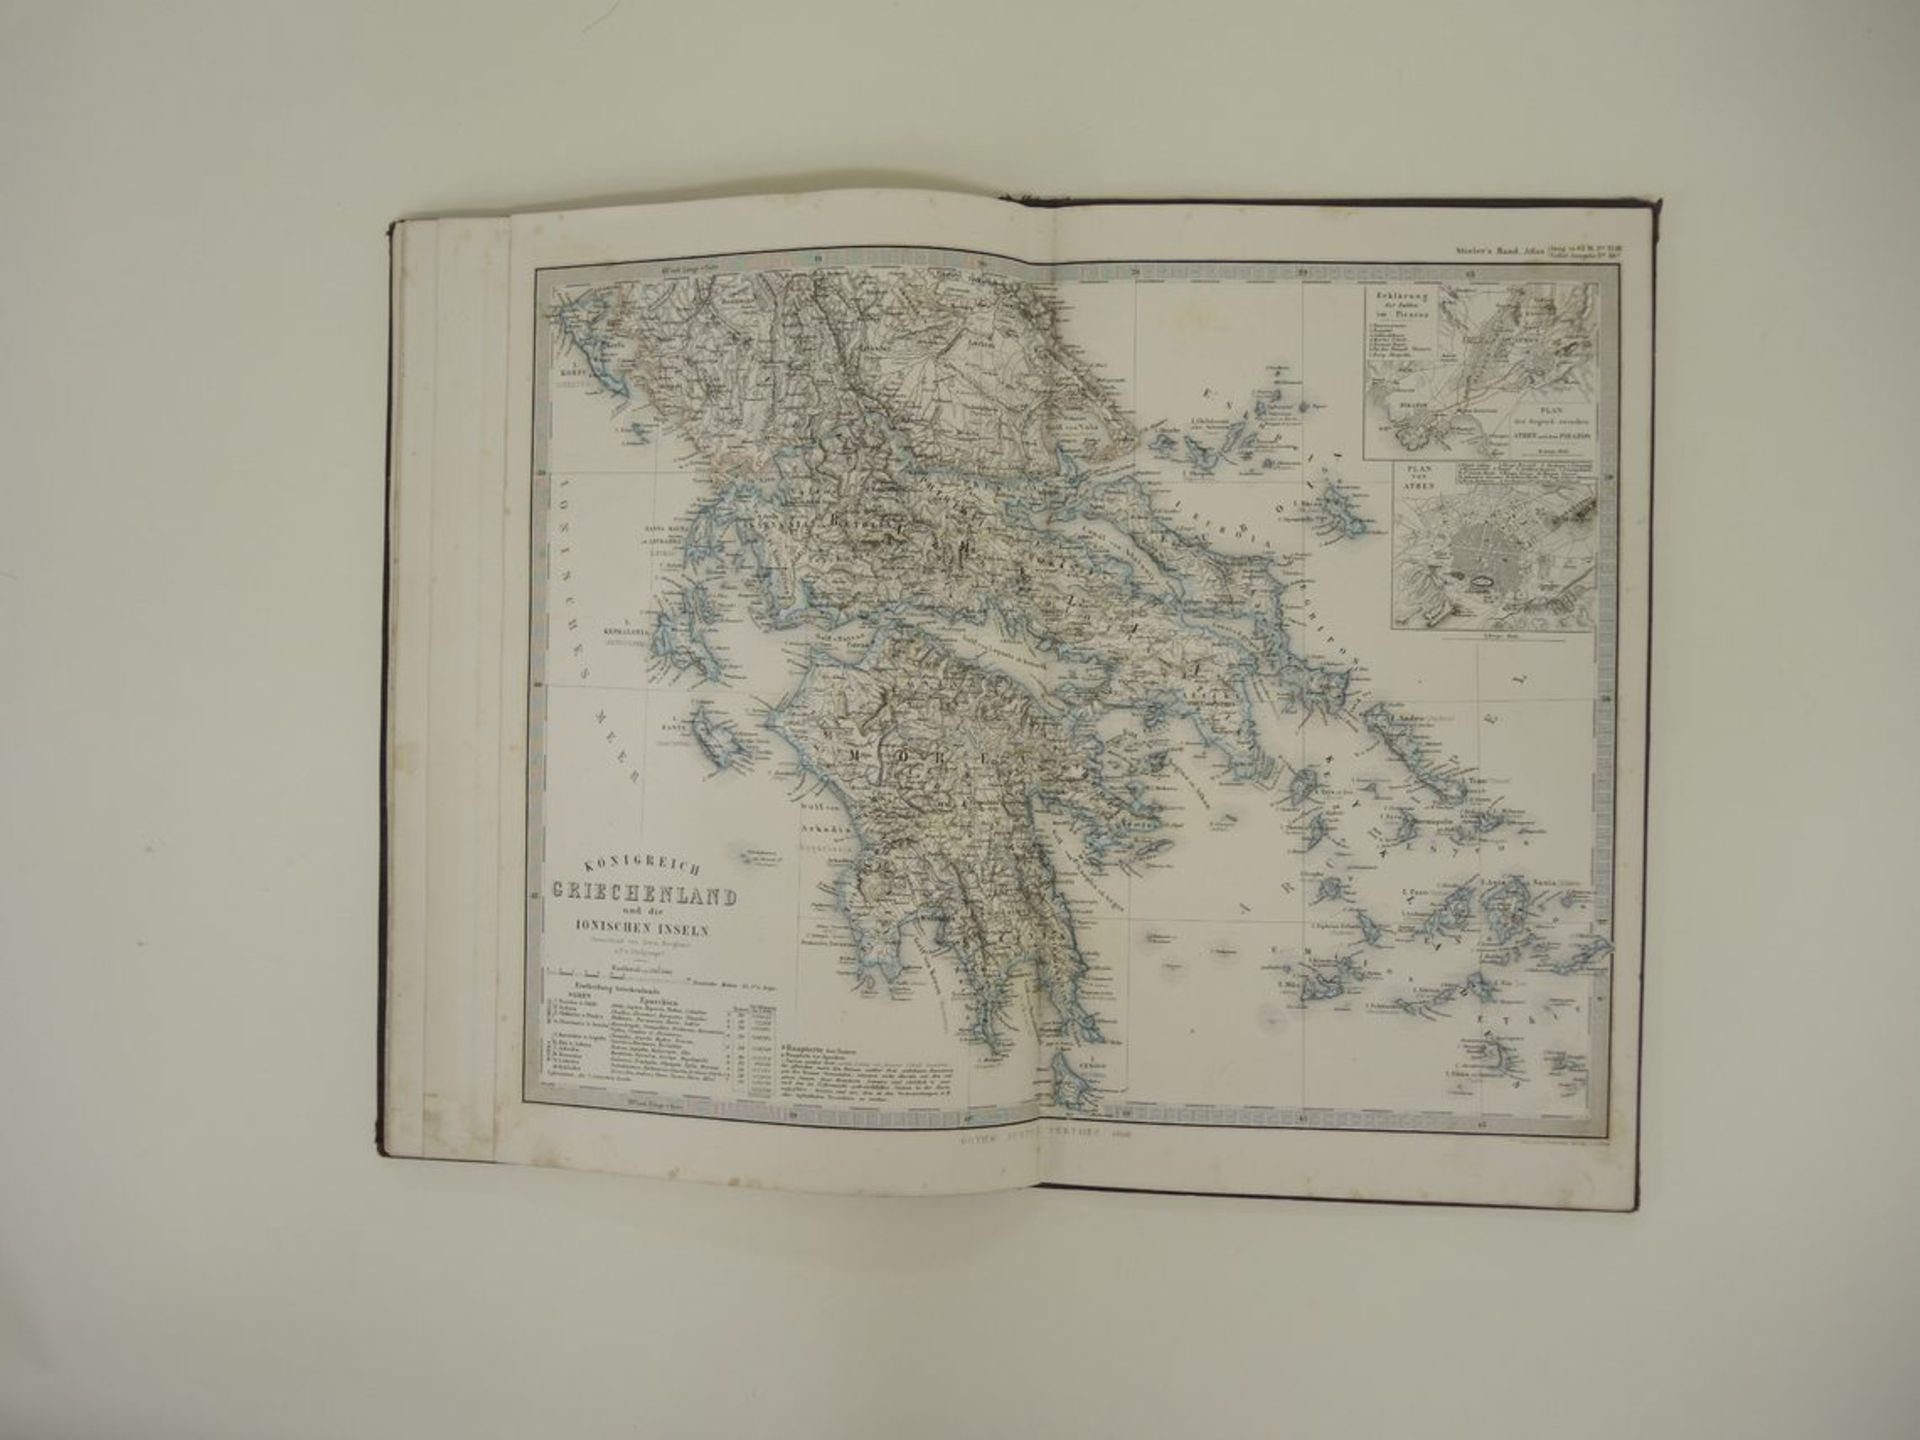 Stieler's Hand-Atlas31 Karten (doppelblattgroß). (Titelblatt fehlt). Gotha 1877. Karten intakt,